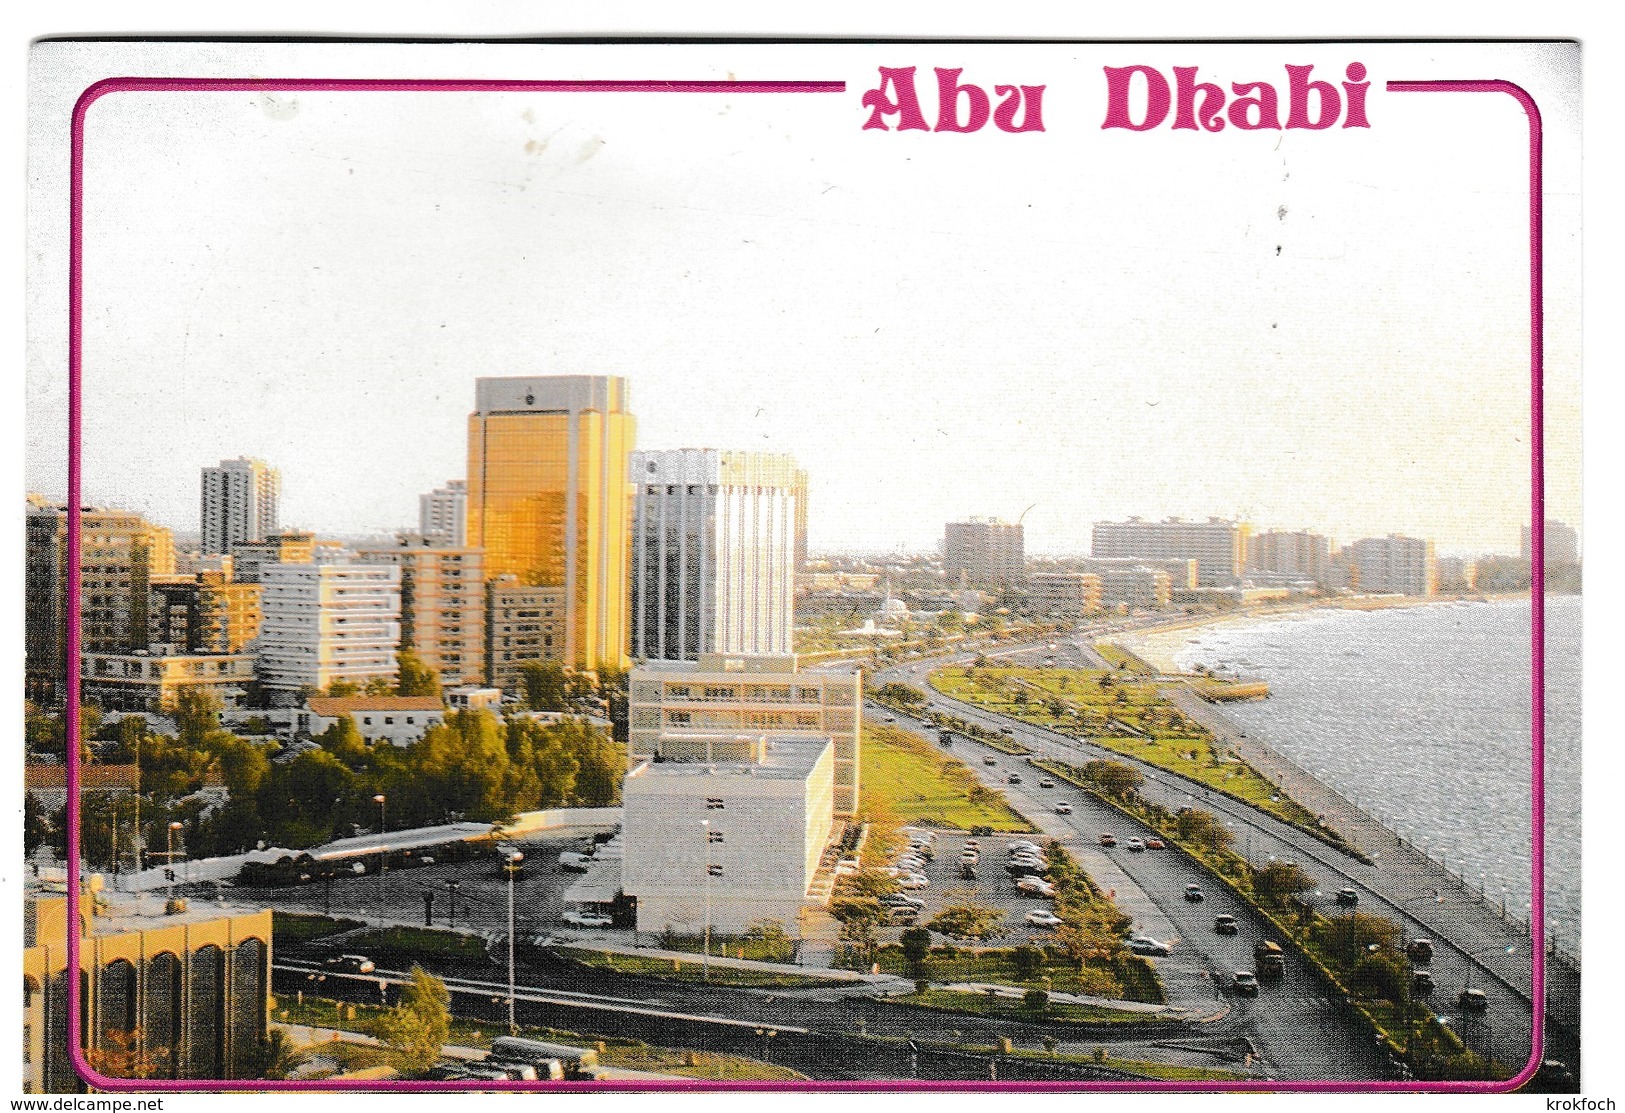 Abu Dhabi 1994 - UAE EAU - United Arab Emirates